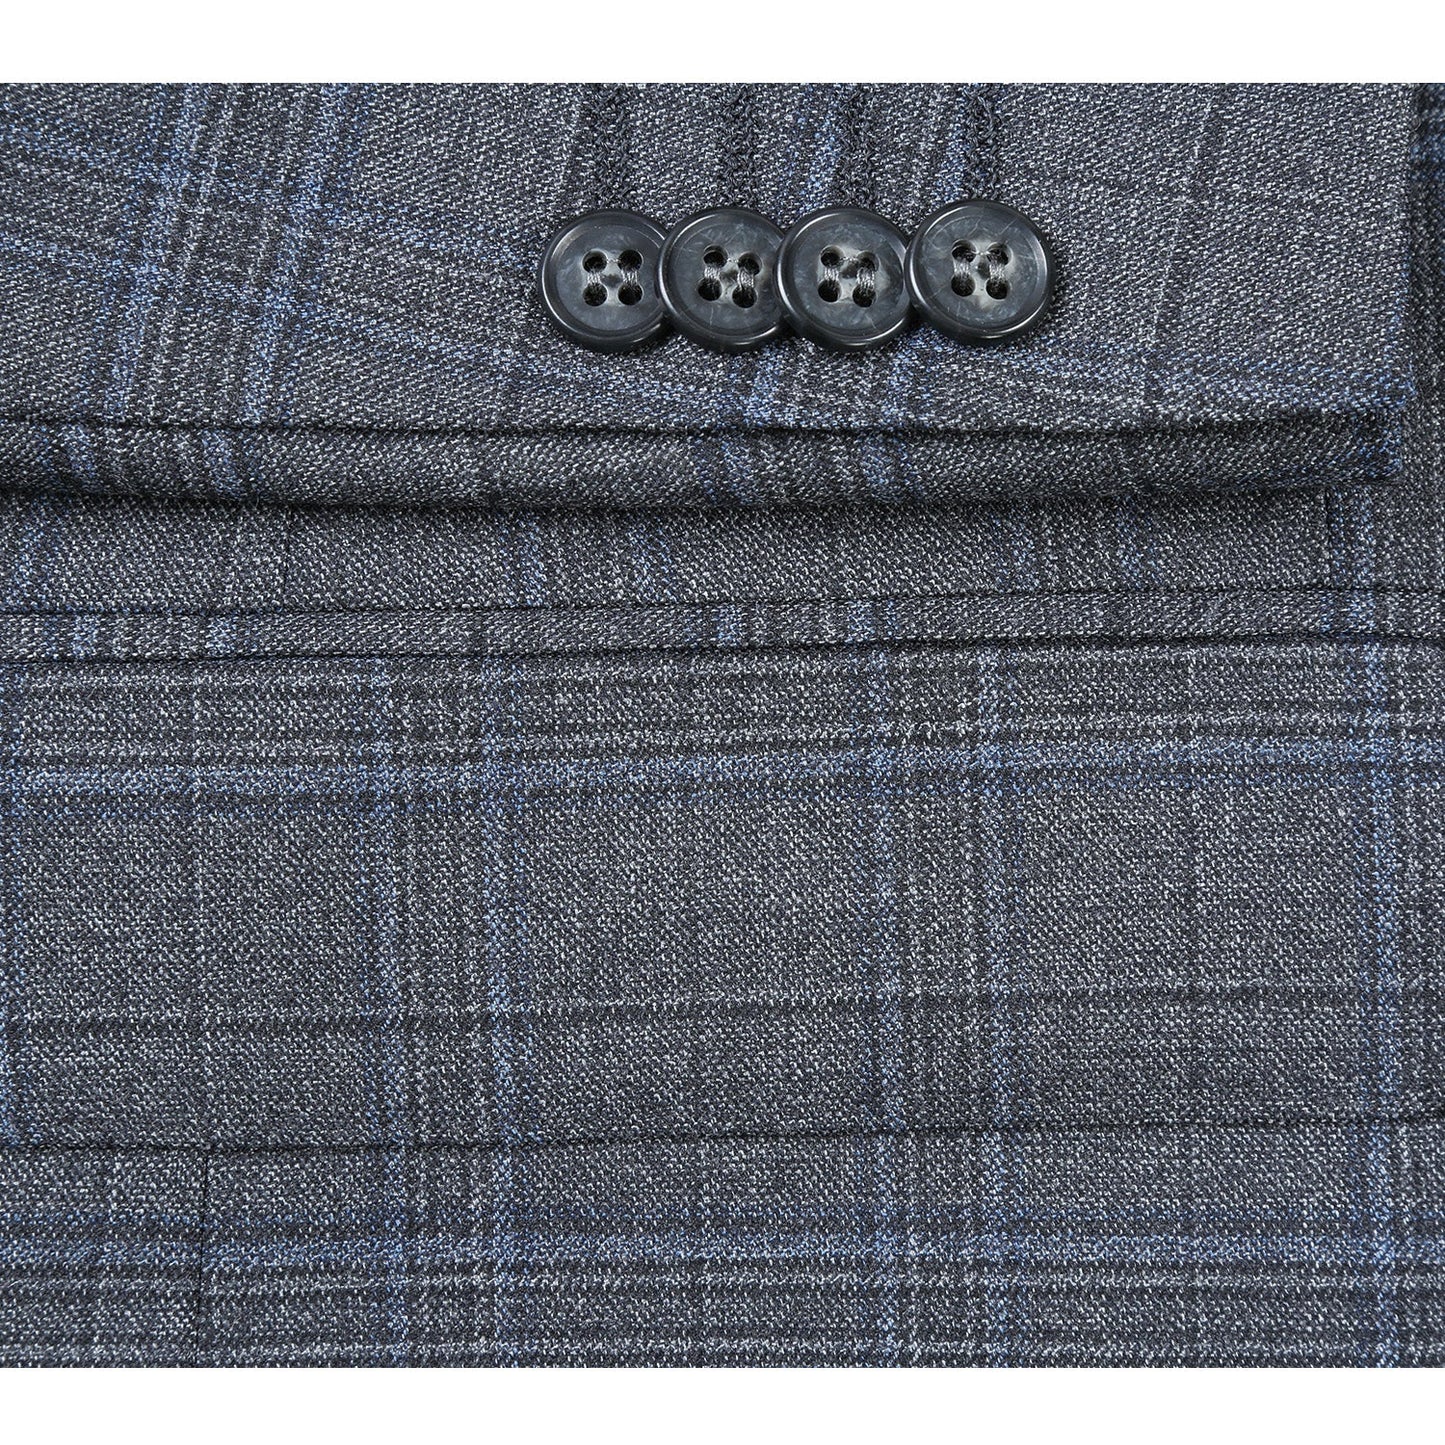 564-7 Men's Classic Fit Wool Blend Grey with Blue Plaid Suit